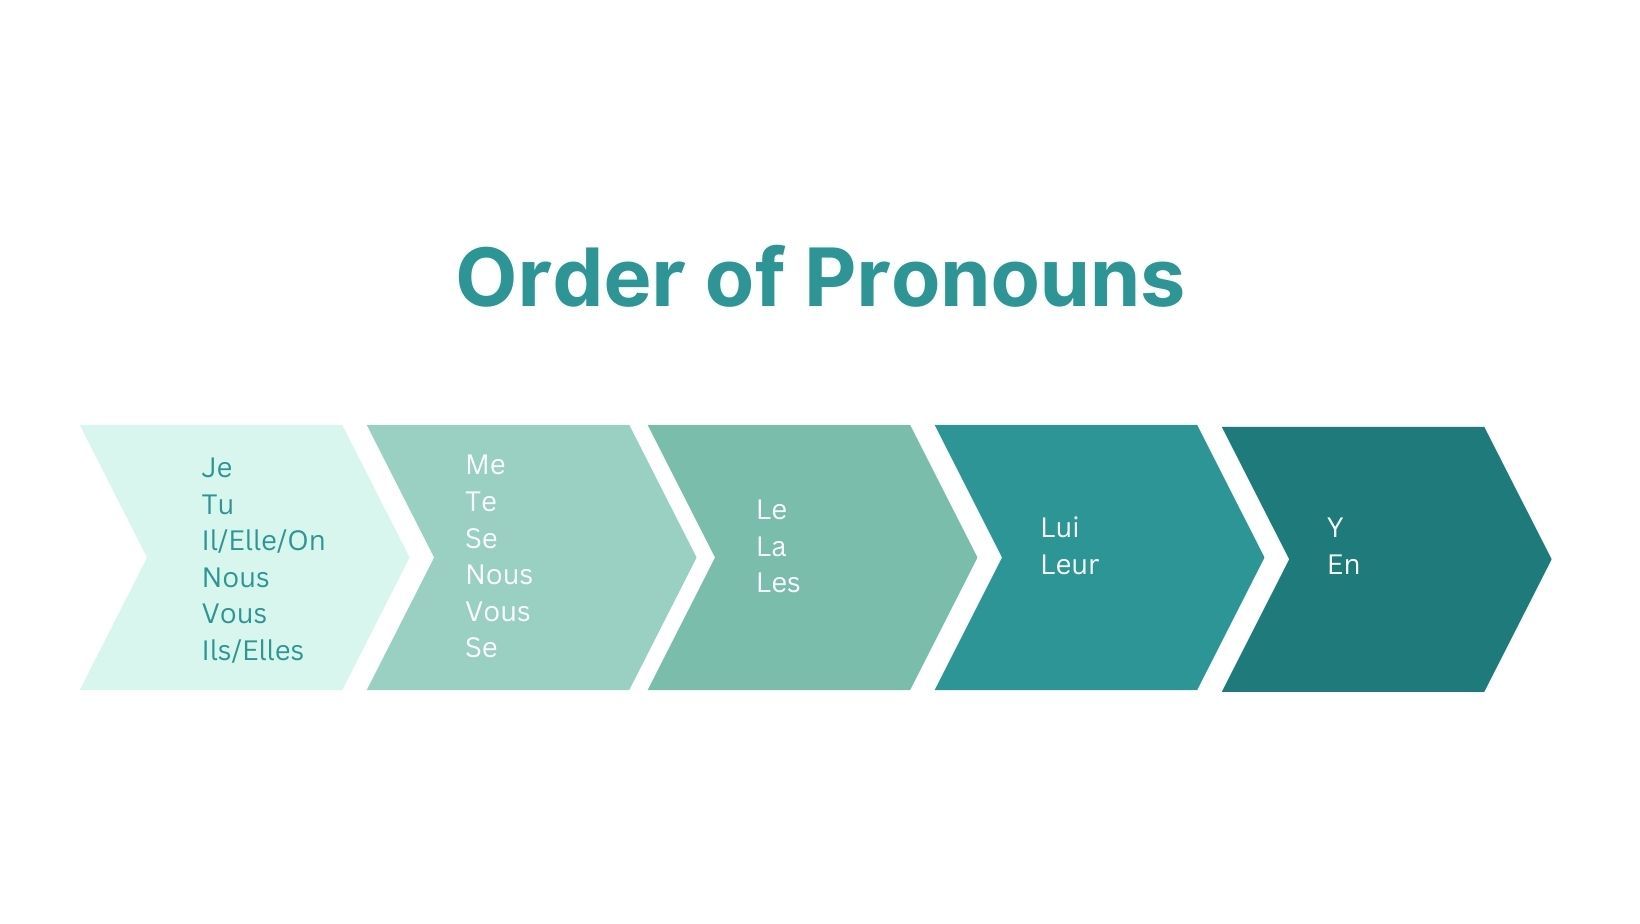 Pronouns order